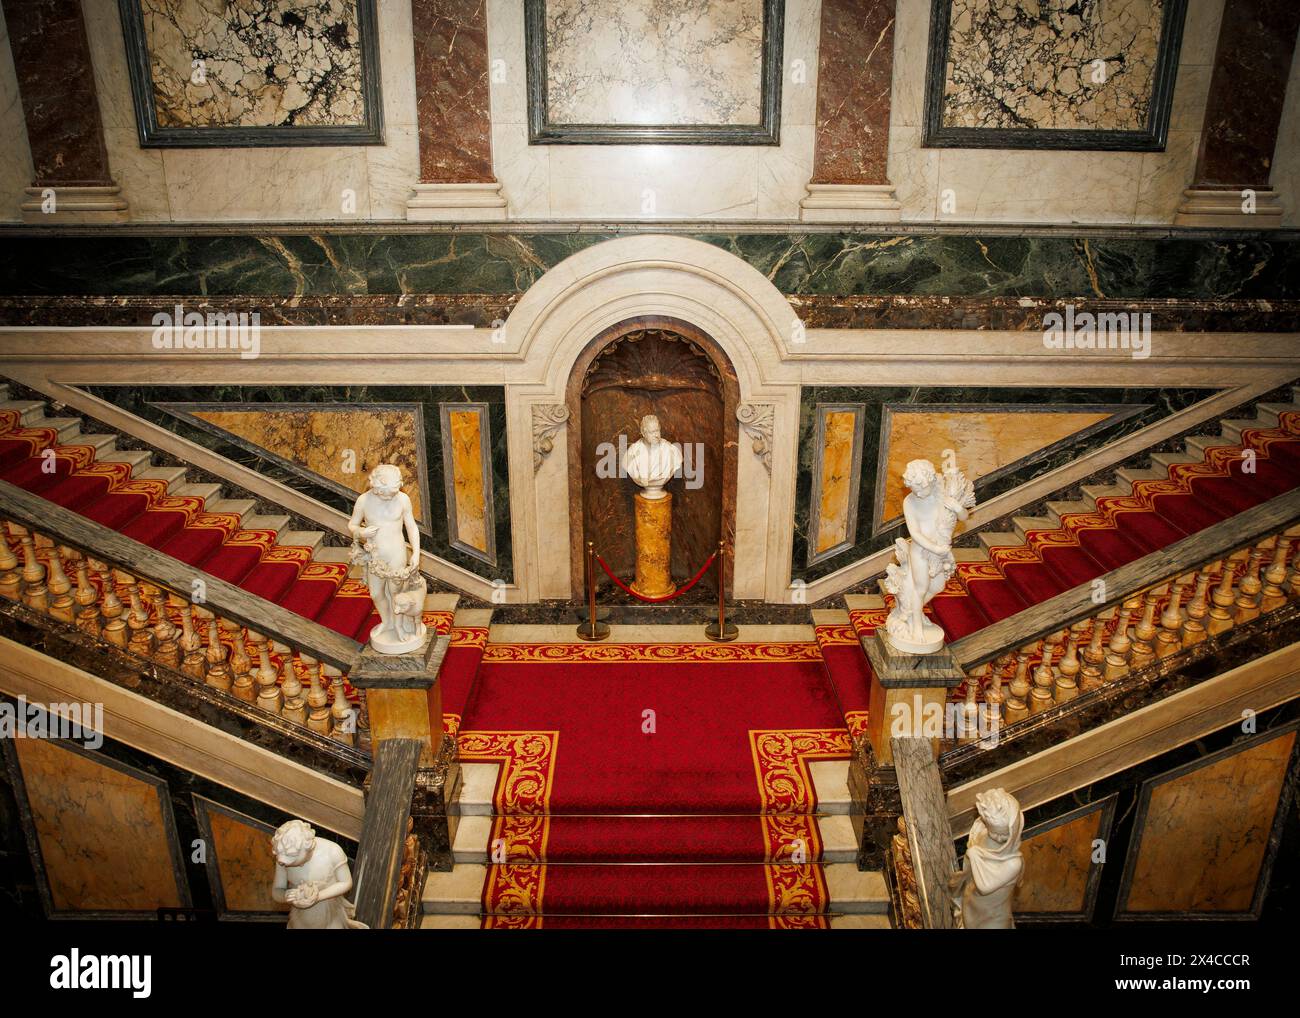 Interior of the Hallway and Staircase at Goldsmiths Hall, City of London ©Film Free Photography (Clarissa Debenham) / Alamy Stock Photo